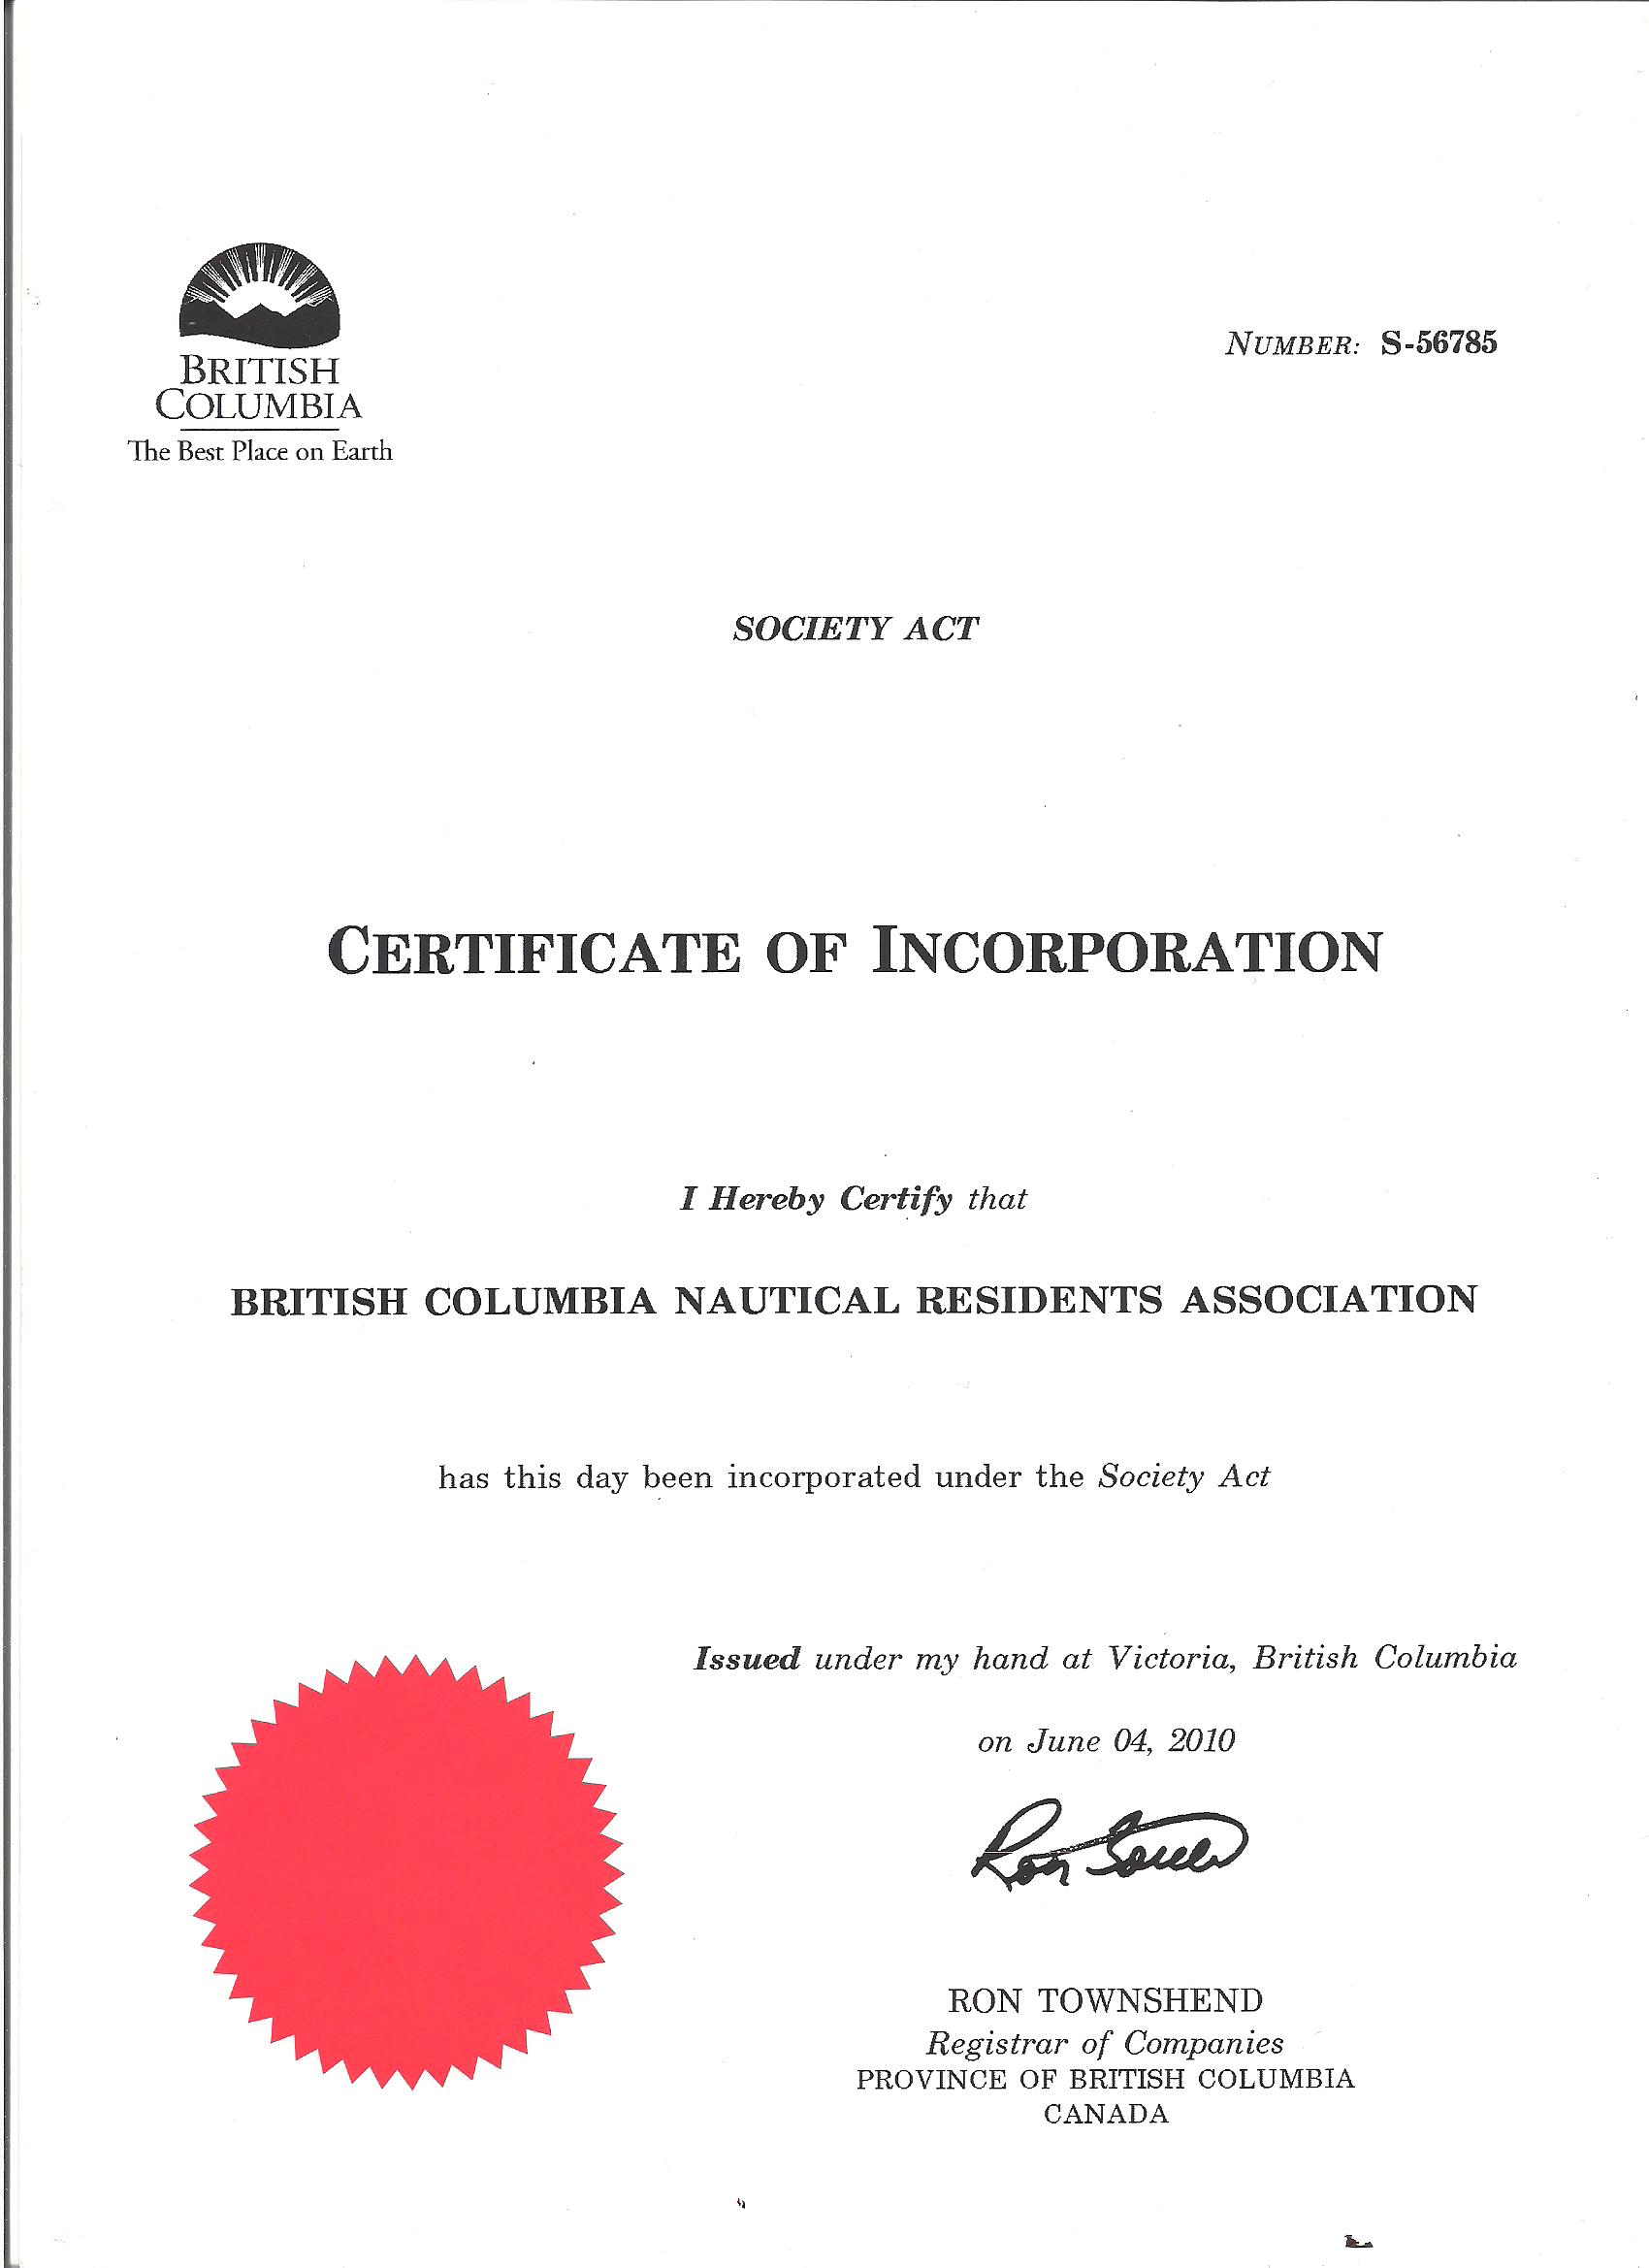 BCNR Incorporation Certificate